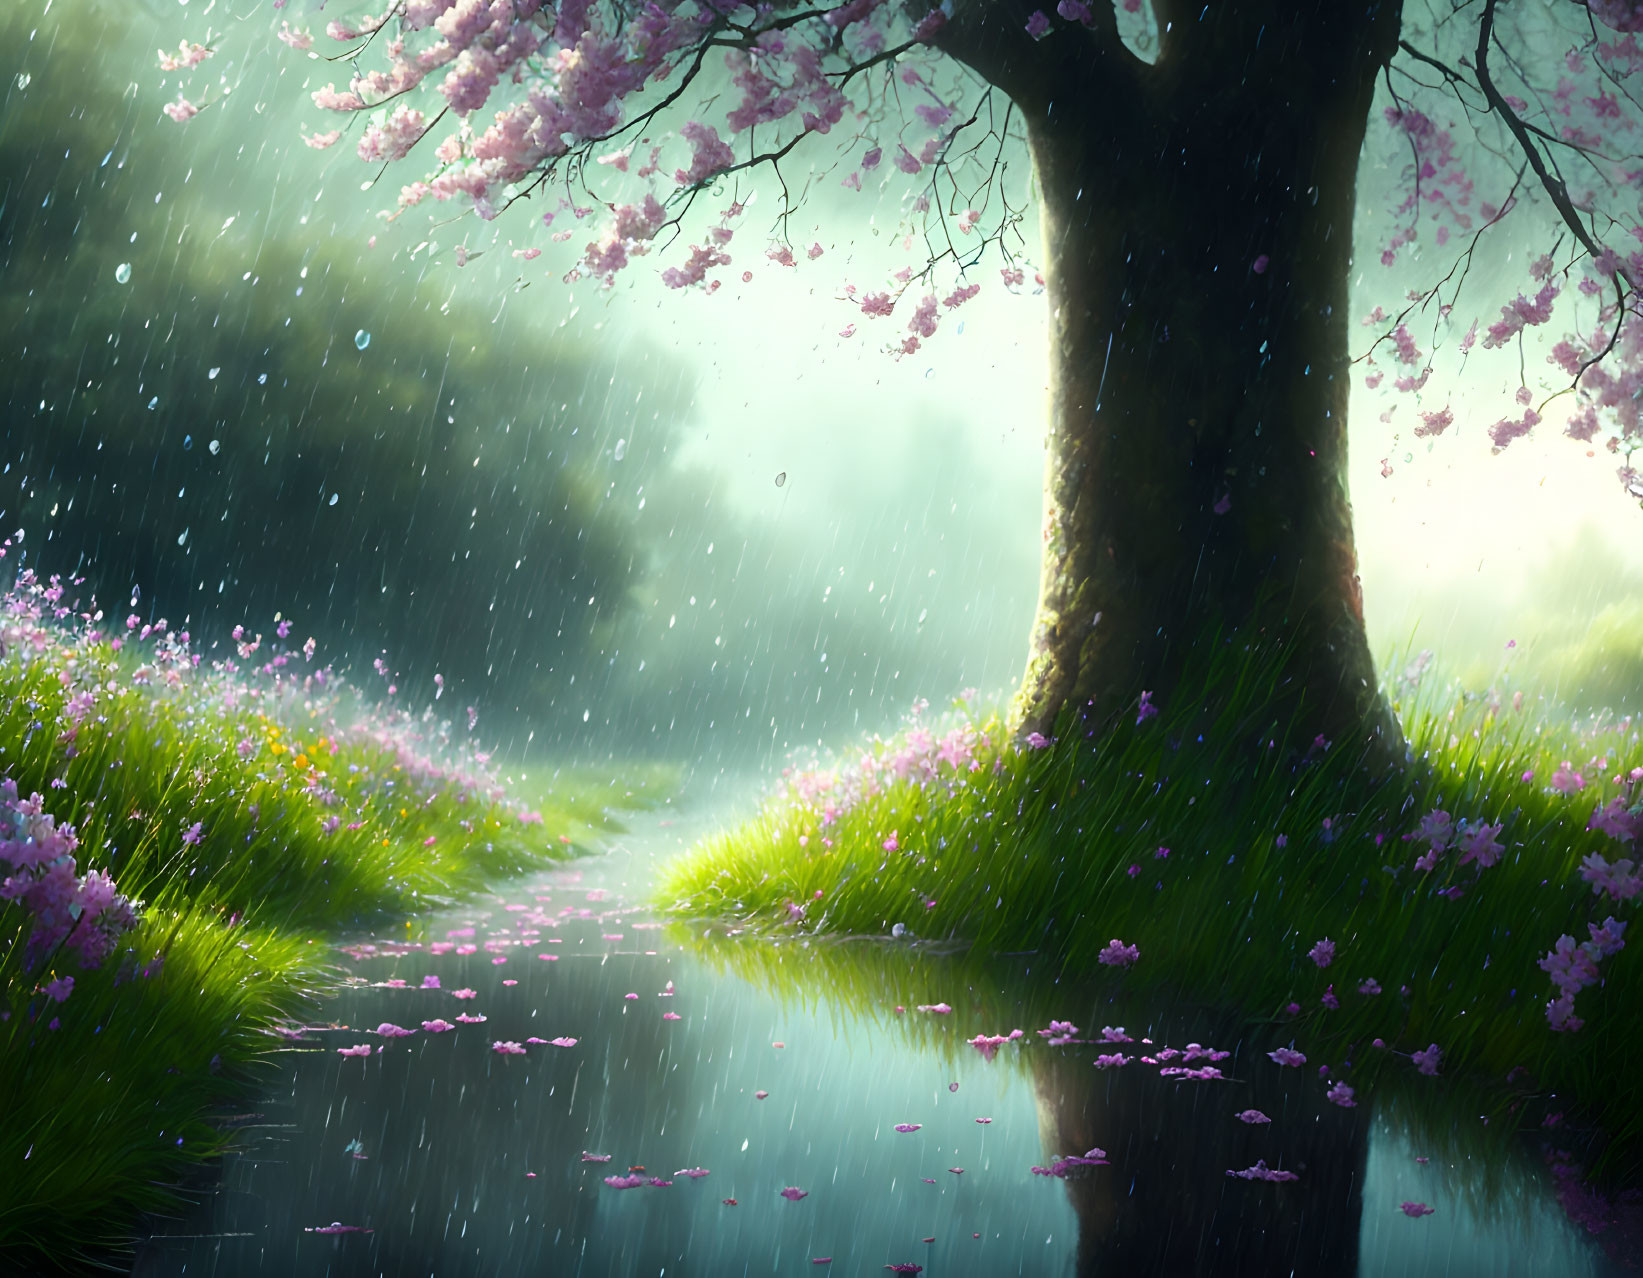  a spring rain scene